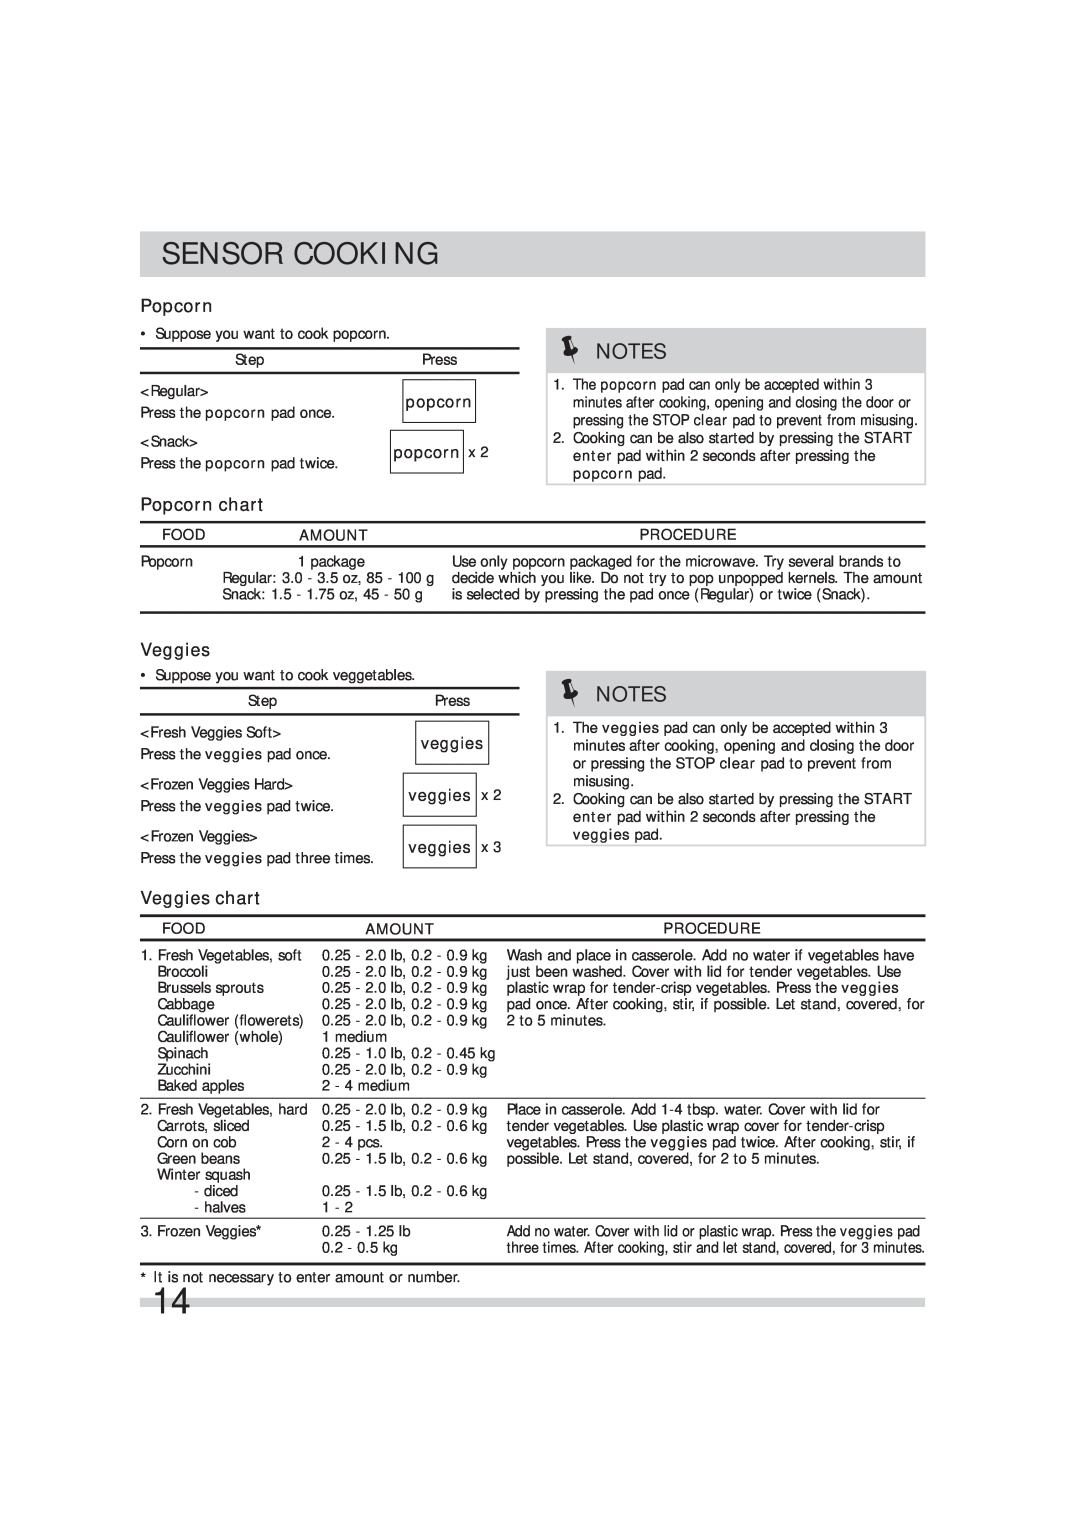 Frigidaire 316495054 manual Popcorn chart, Veggies chart, popcorn, veggies, Sensor Cooking, Food, Amount, Procedure 